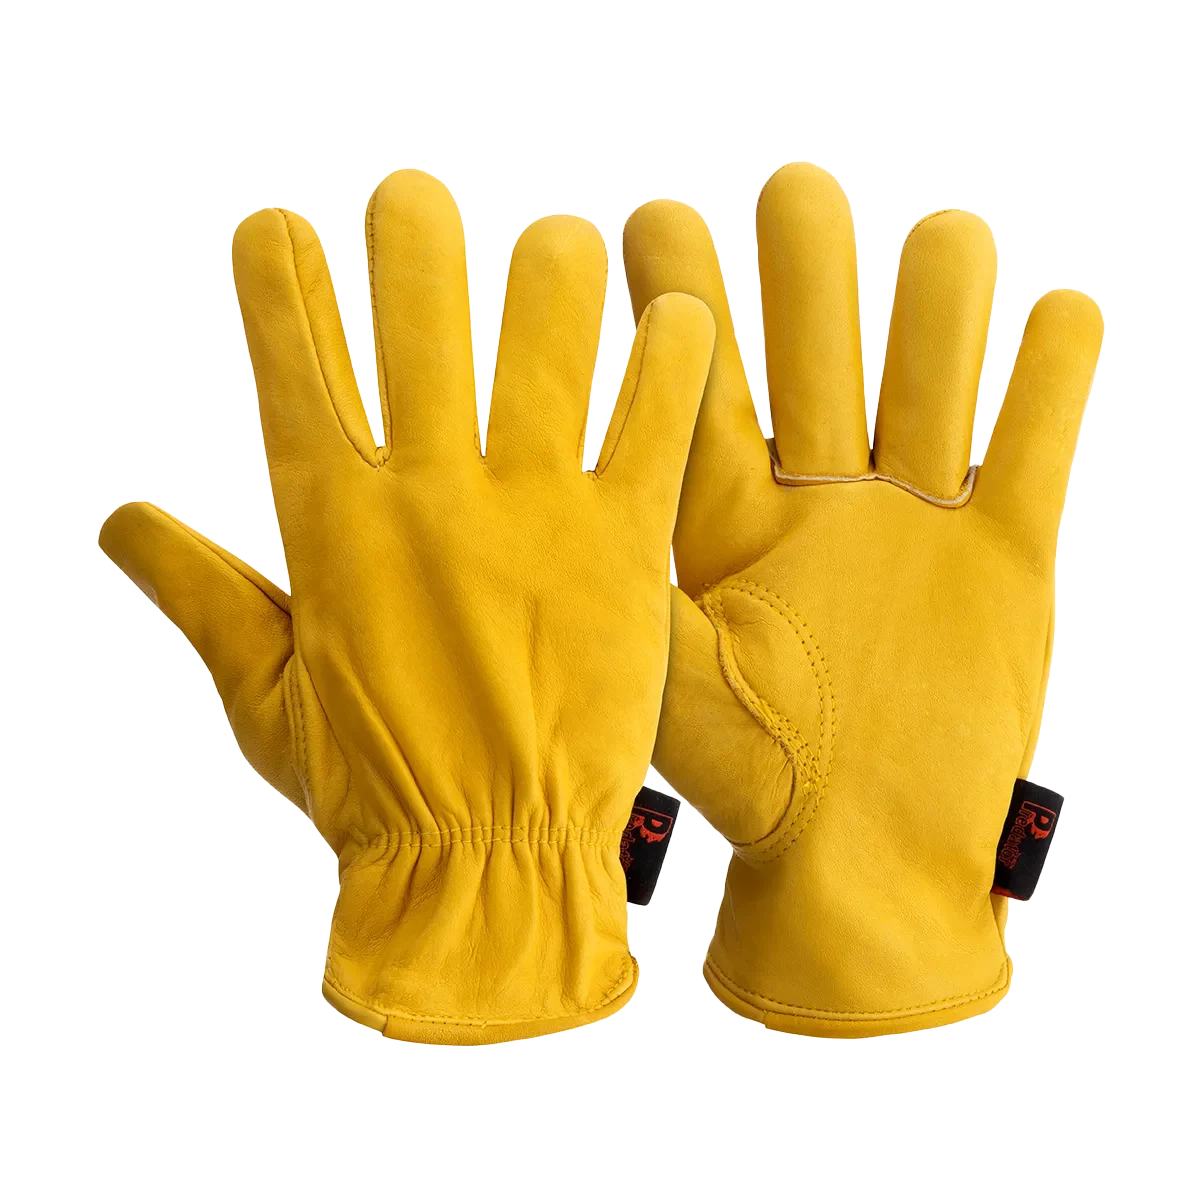 PRED3 GOLD pair Safety Gloves